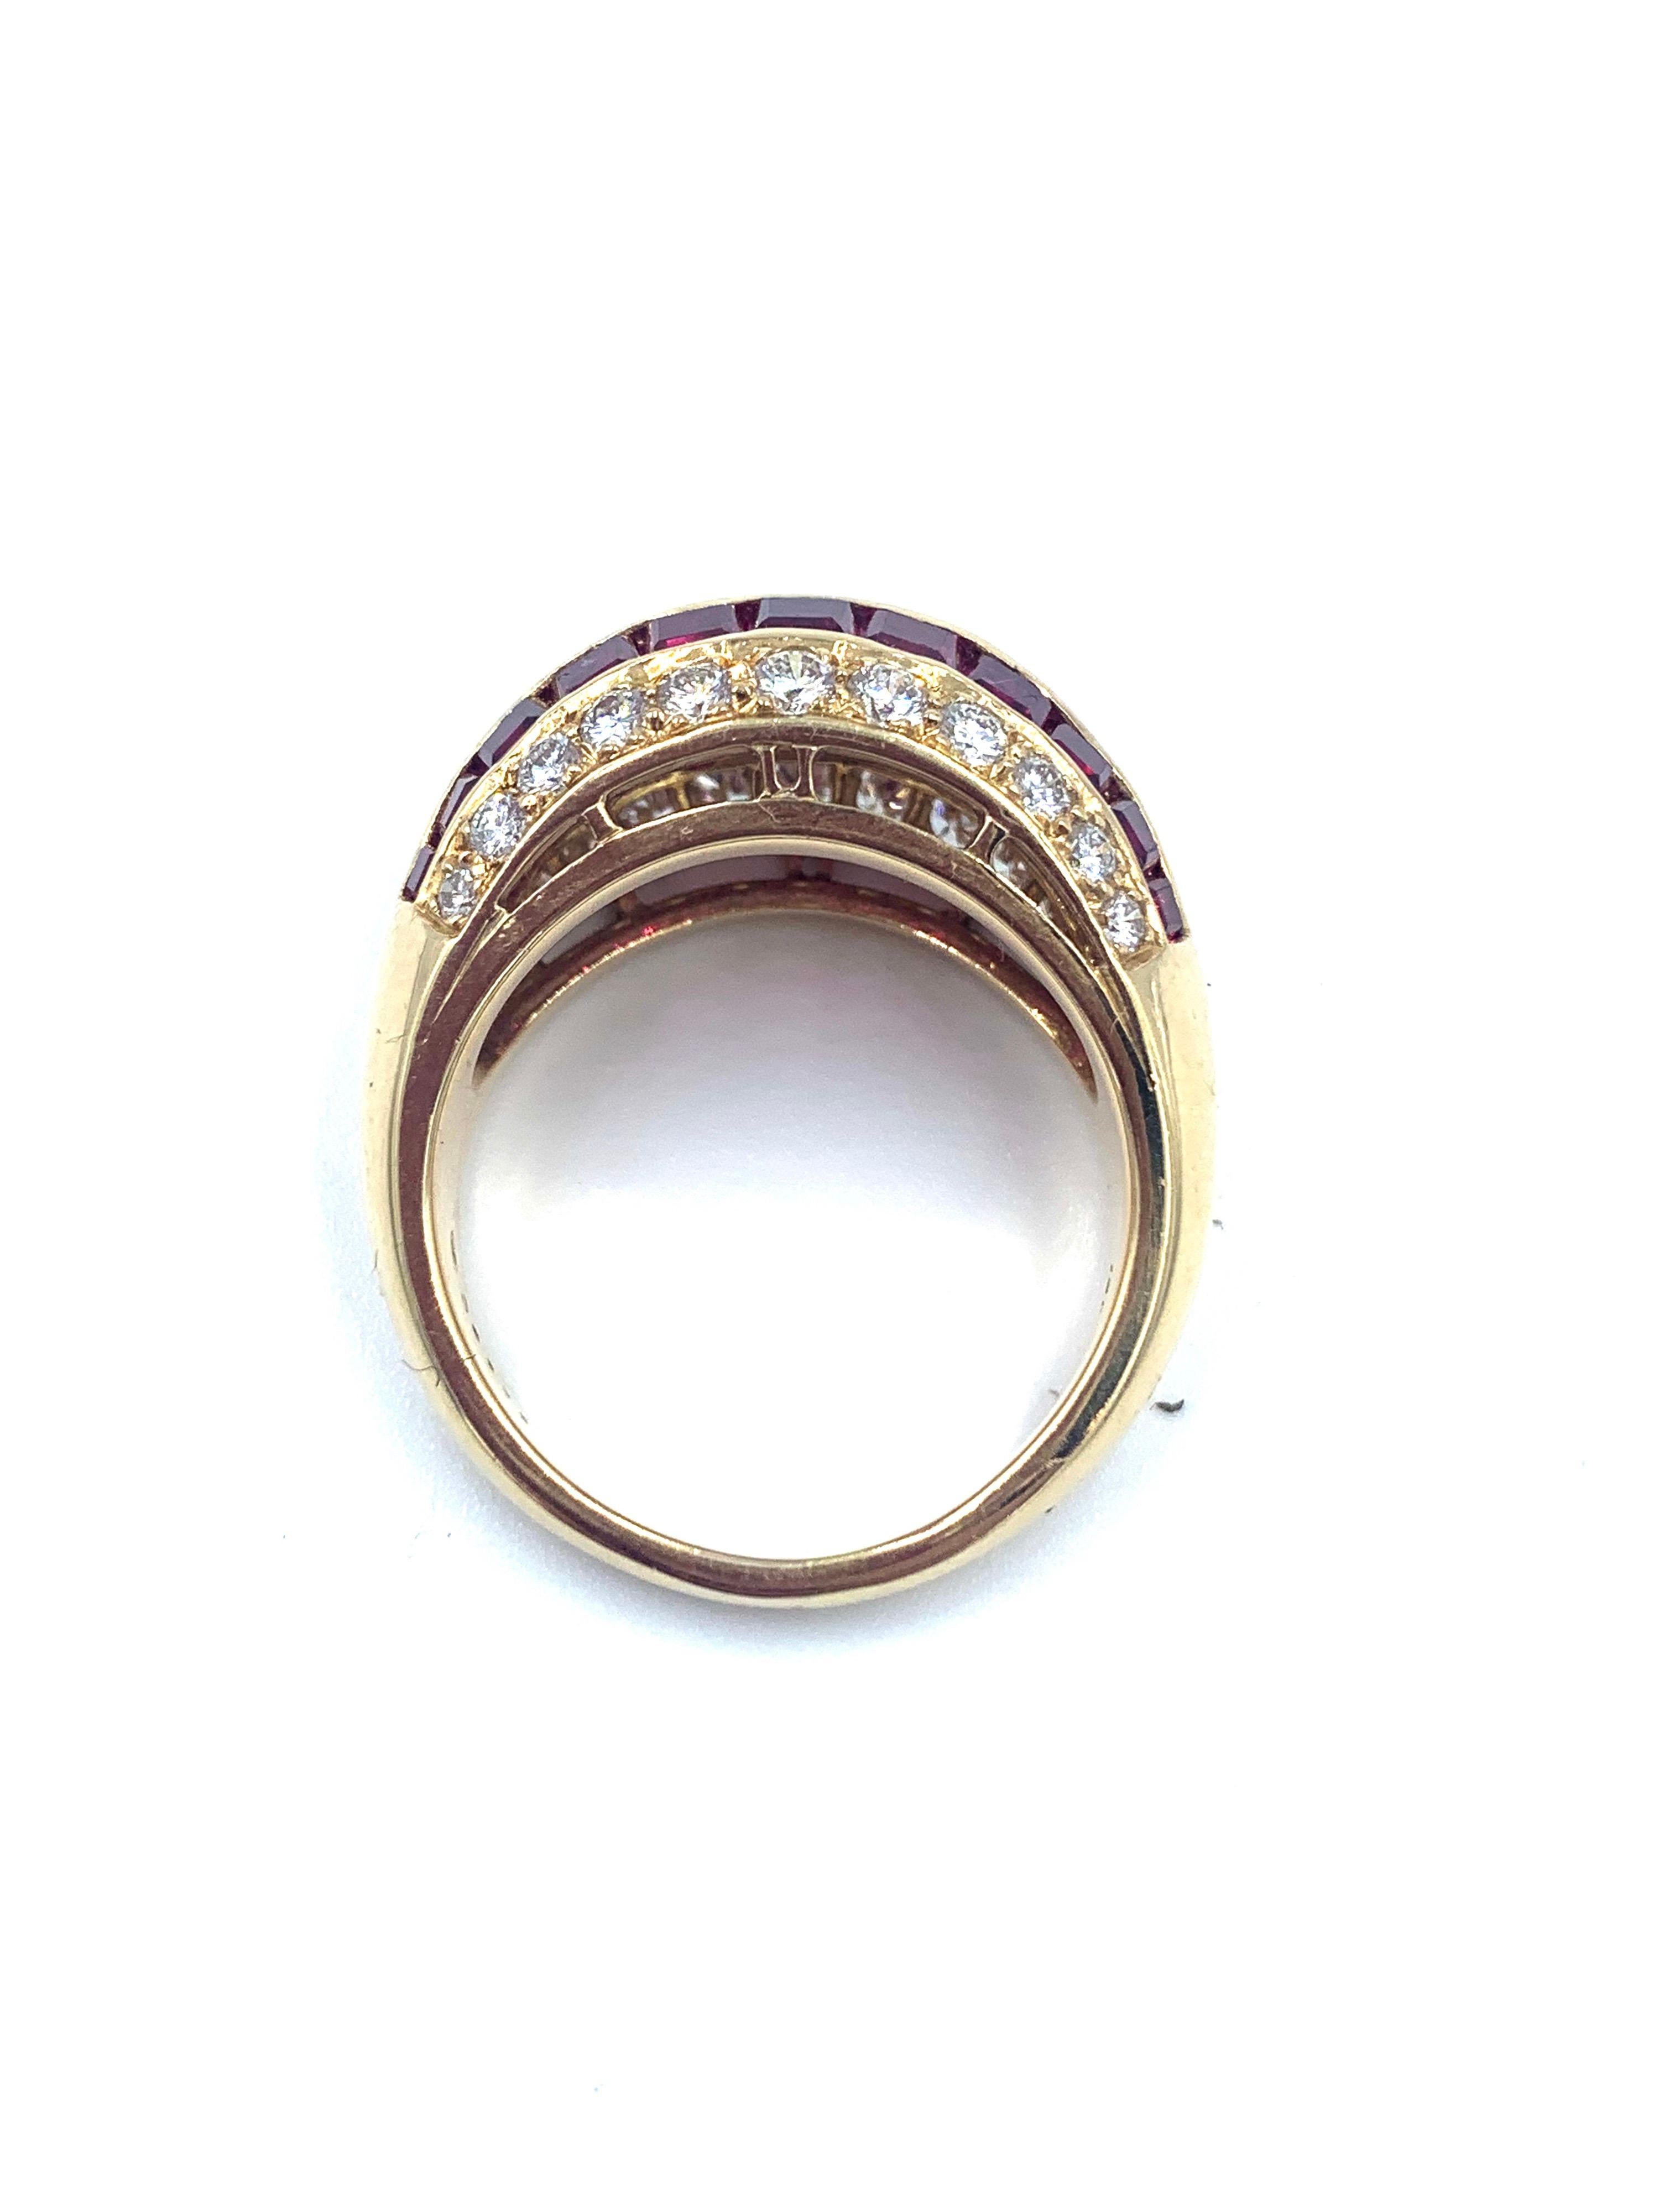 Stunning Oscar Heyman Ruby and Diamond 18 Karat Yellow Gold Dome Ring 2